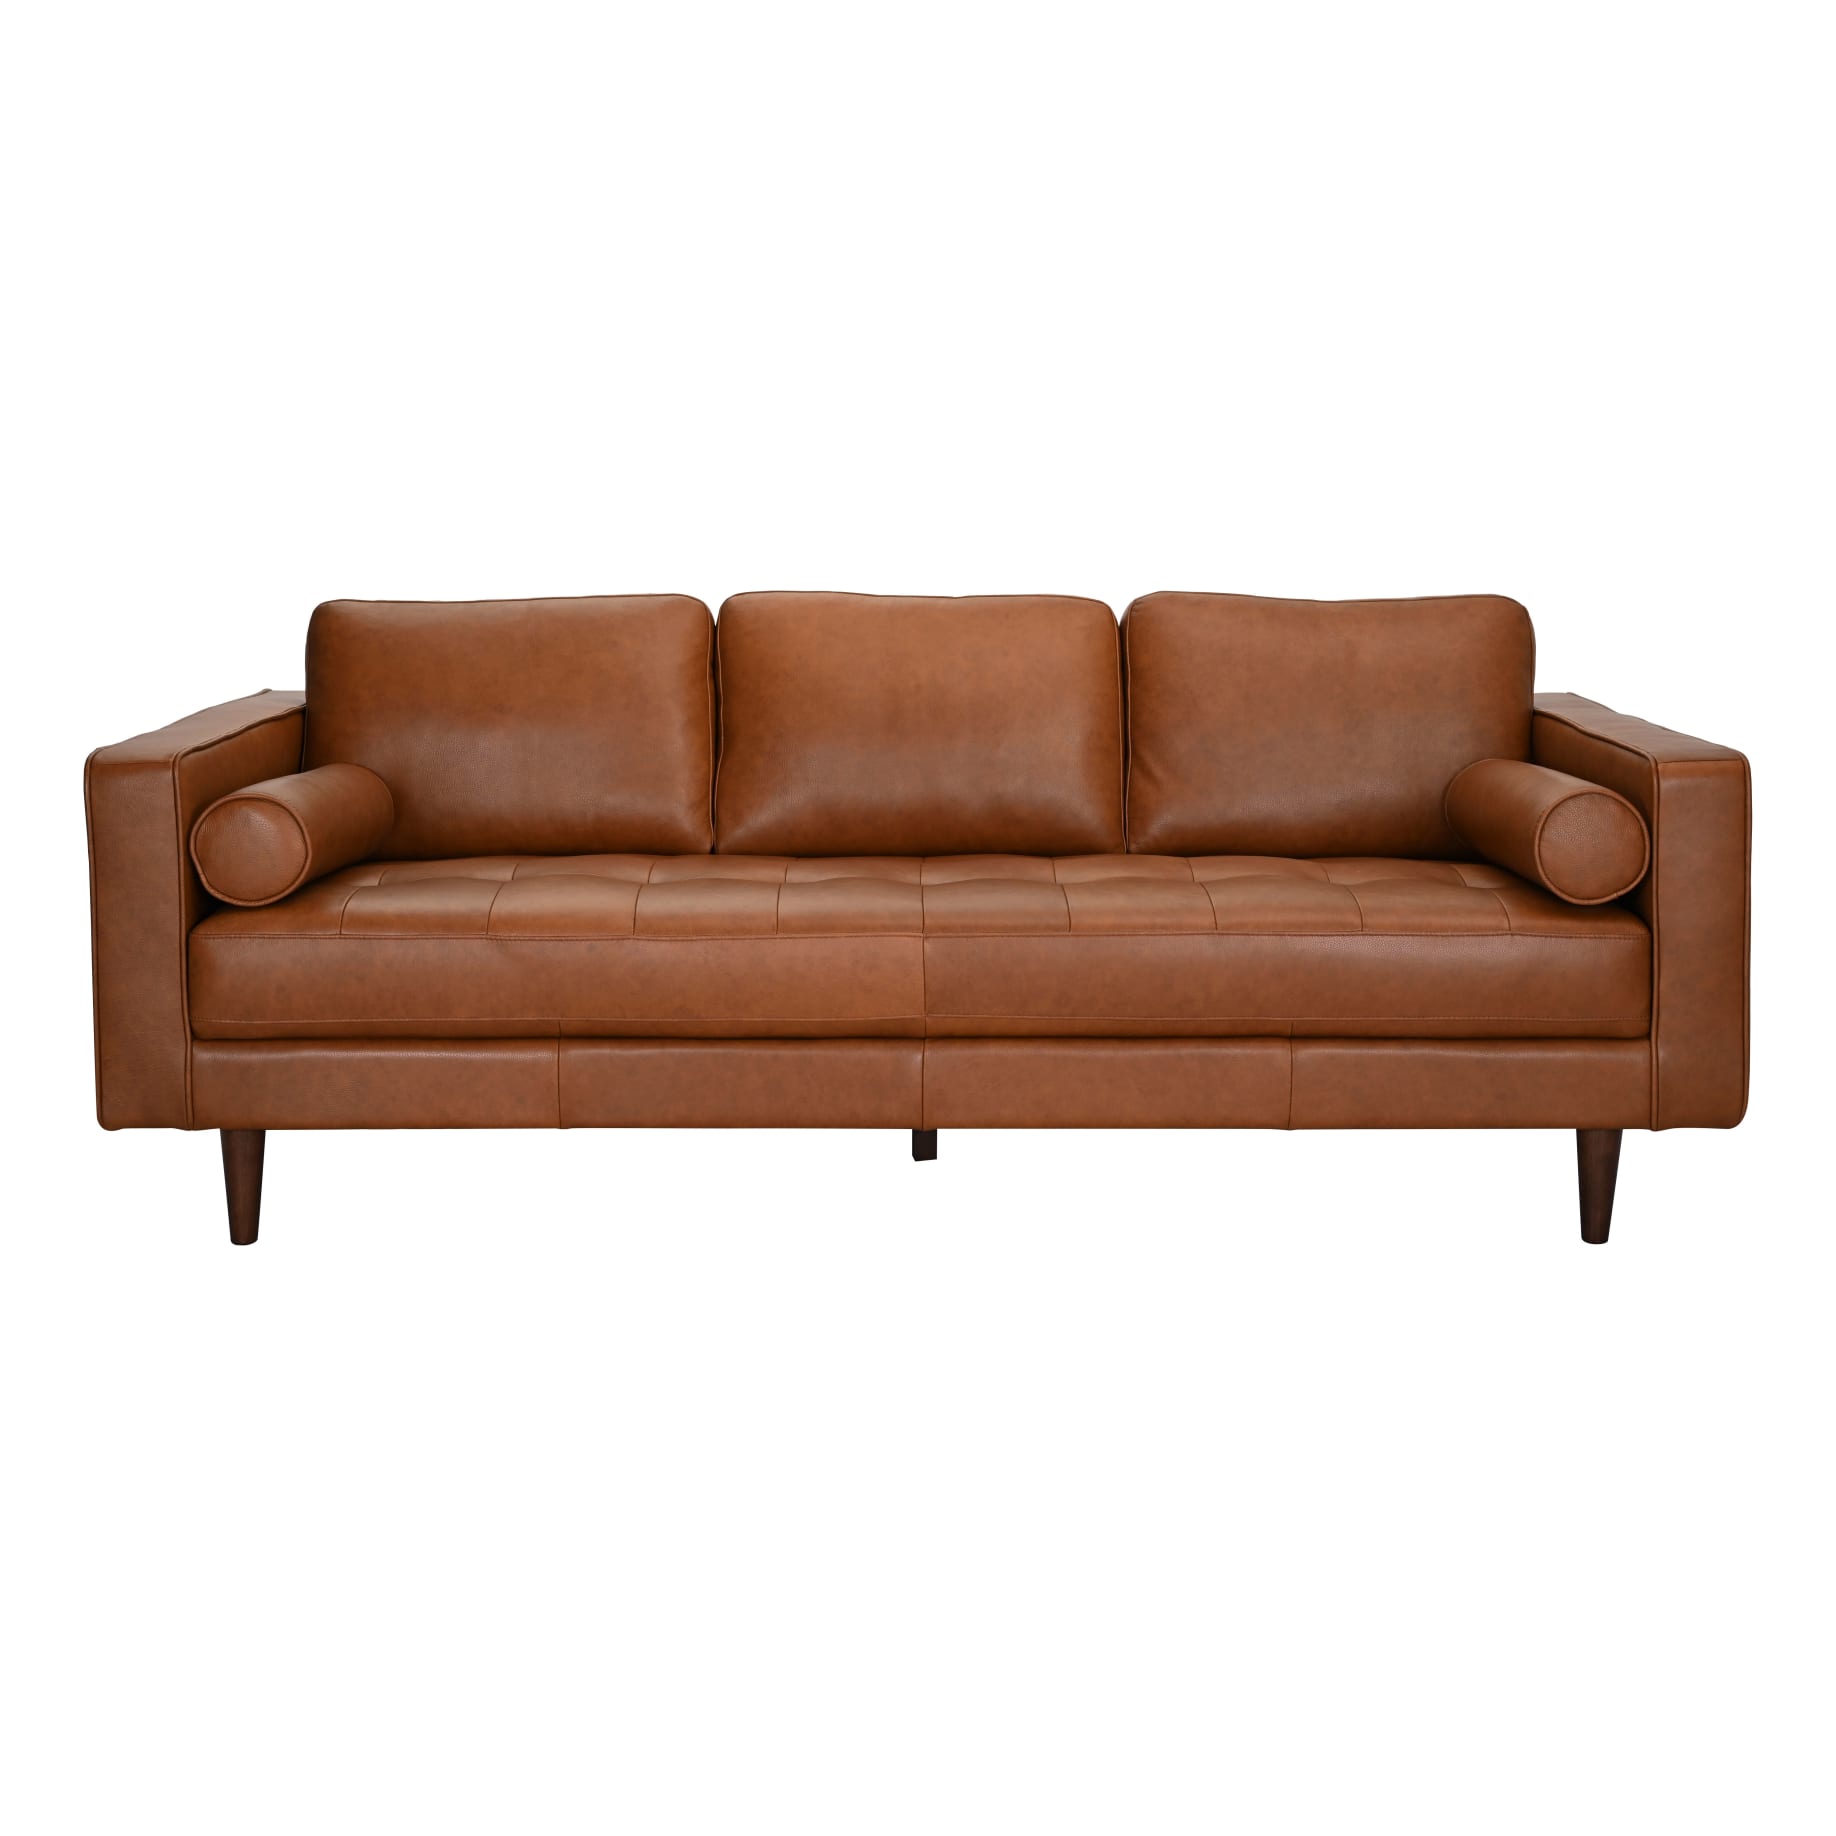 Kobe 3 Seater Sofa in Missouri Leather Brown